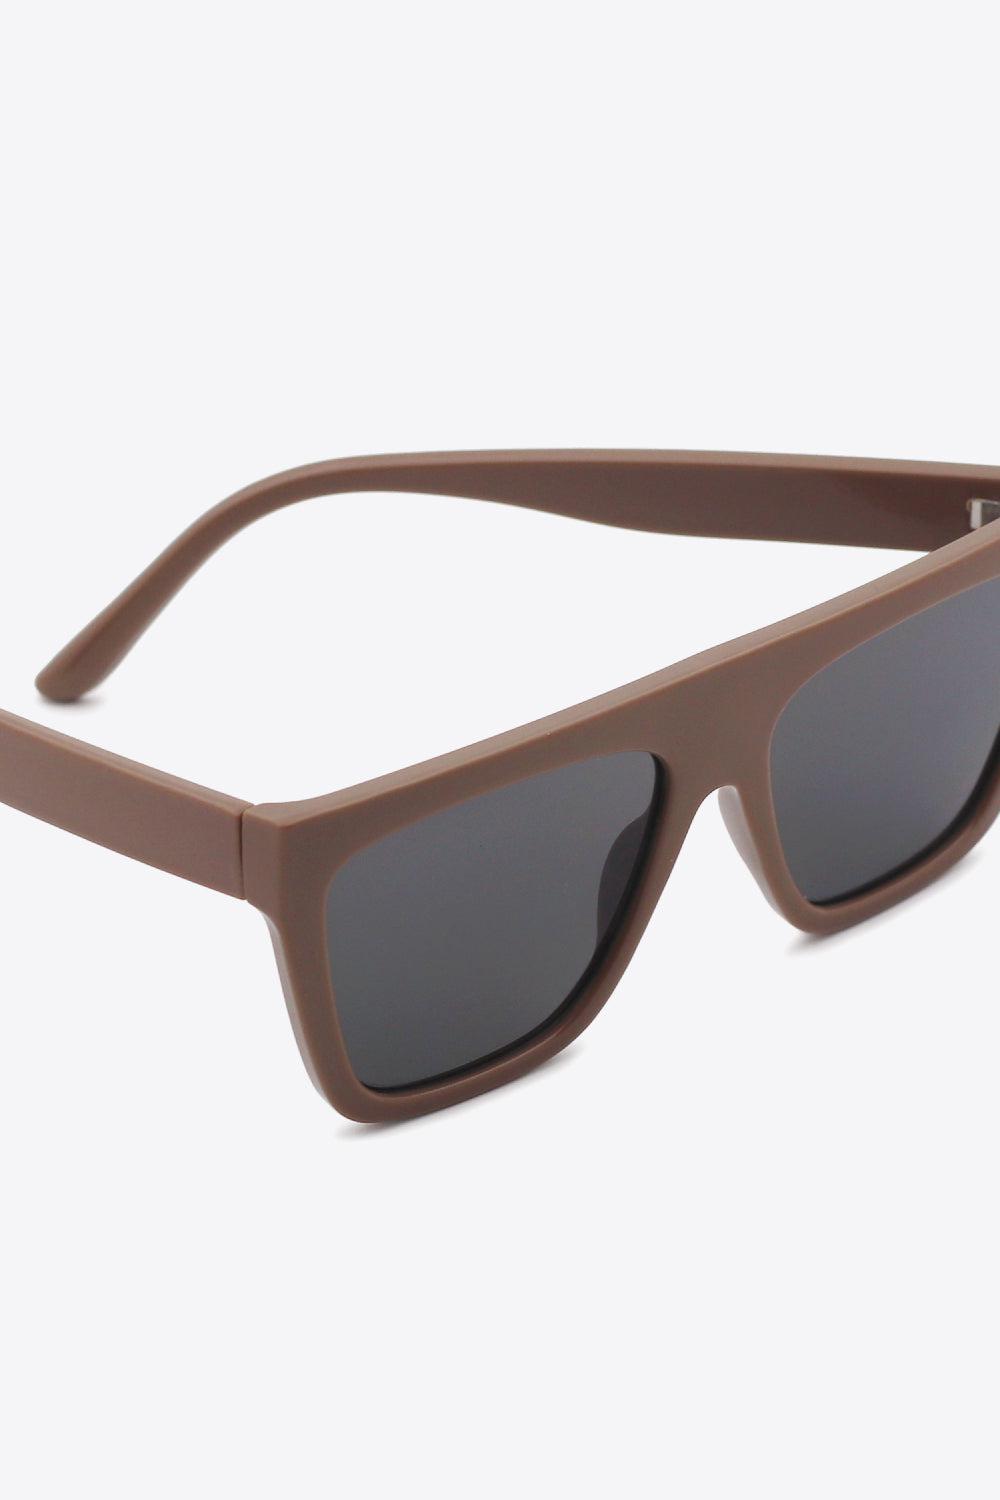 UV400 Polycarbonate Wayfarer Sunglasses BLUE ZONE PLANET